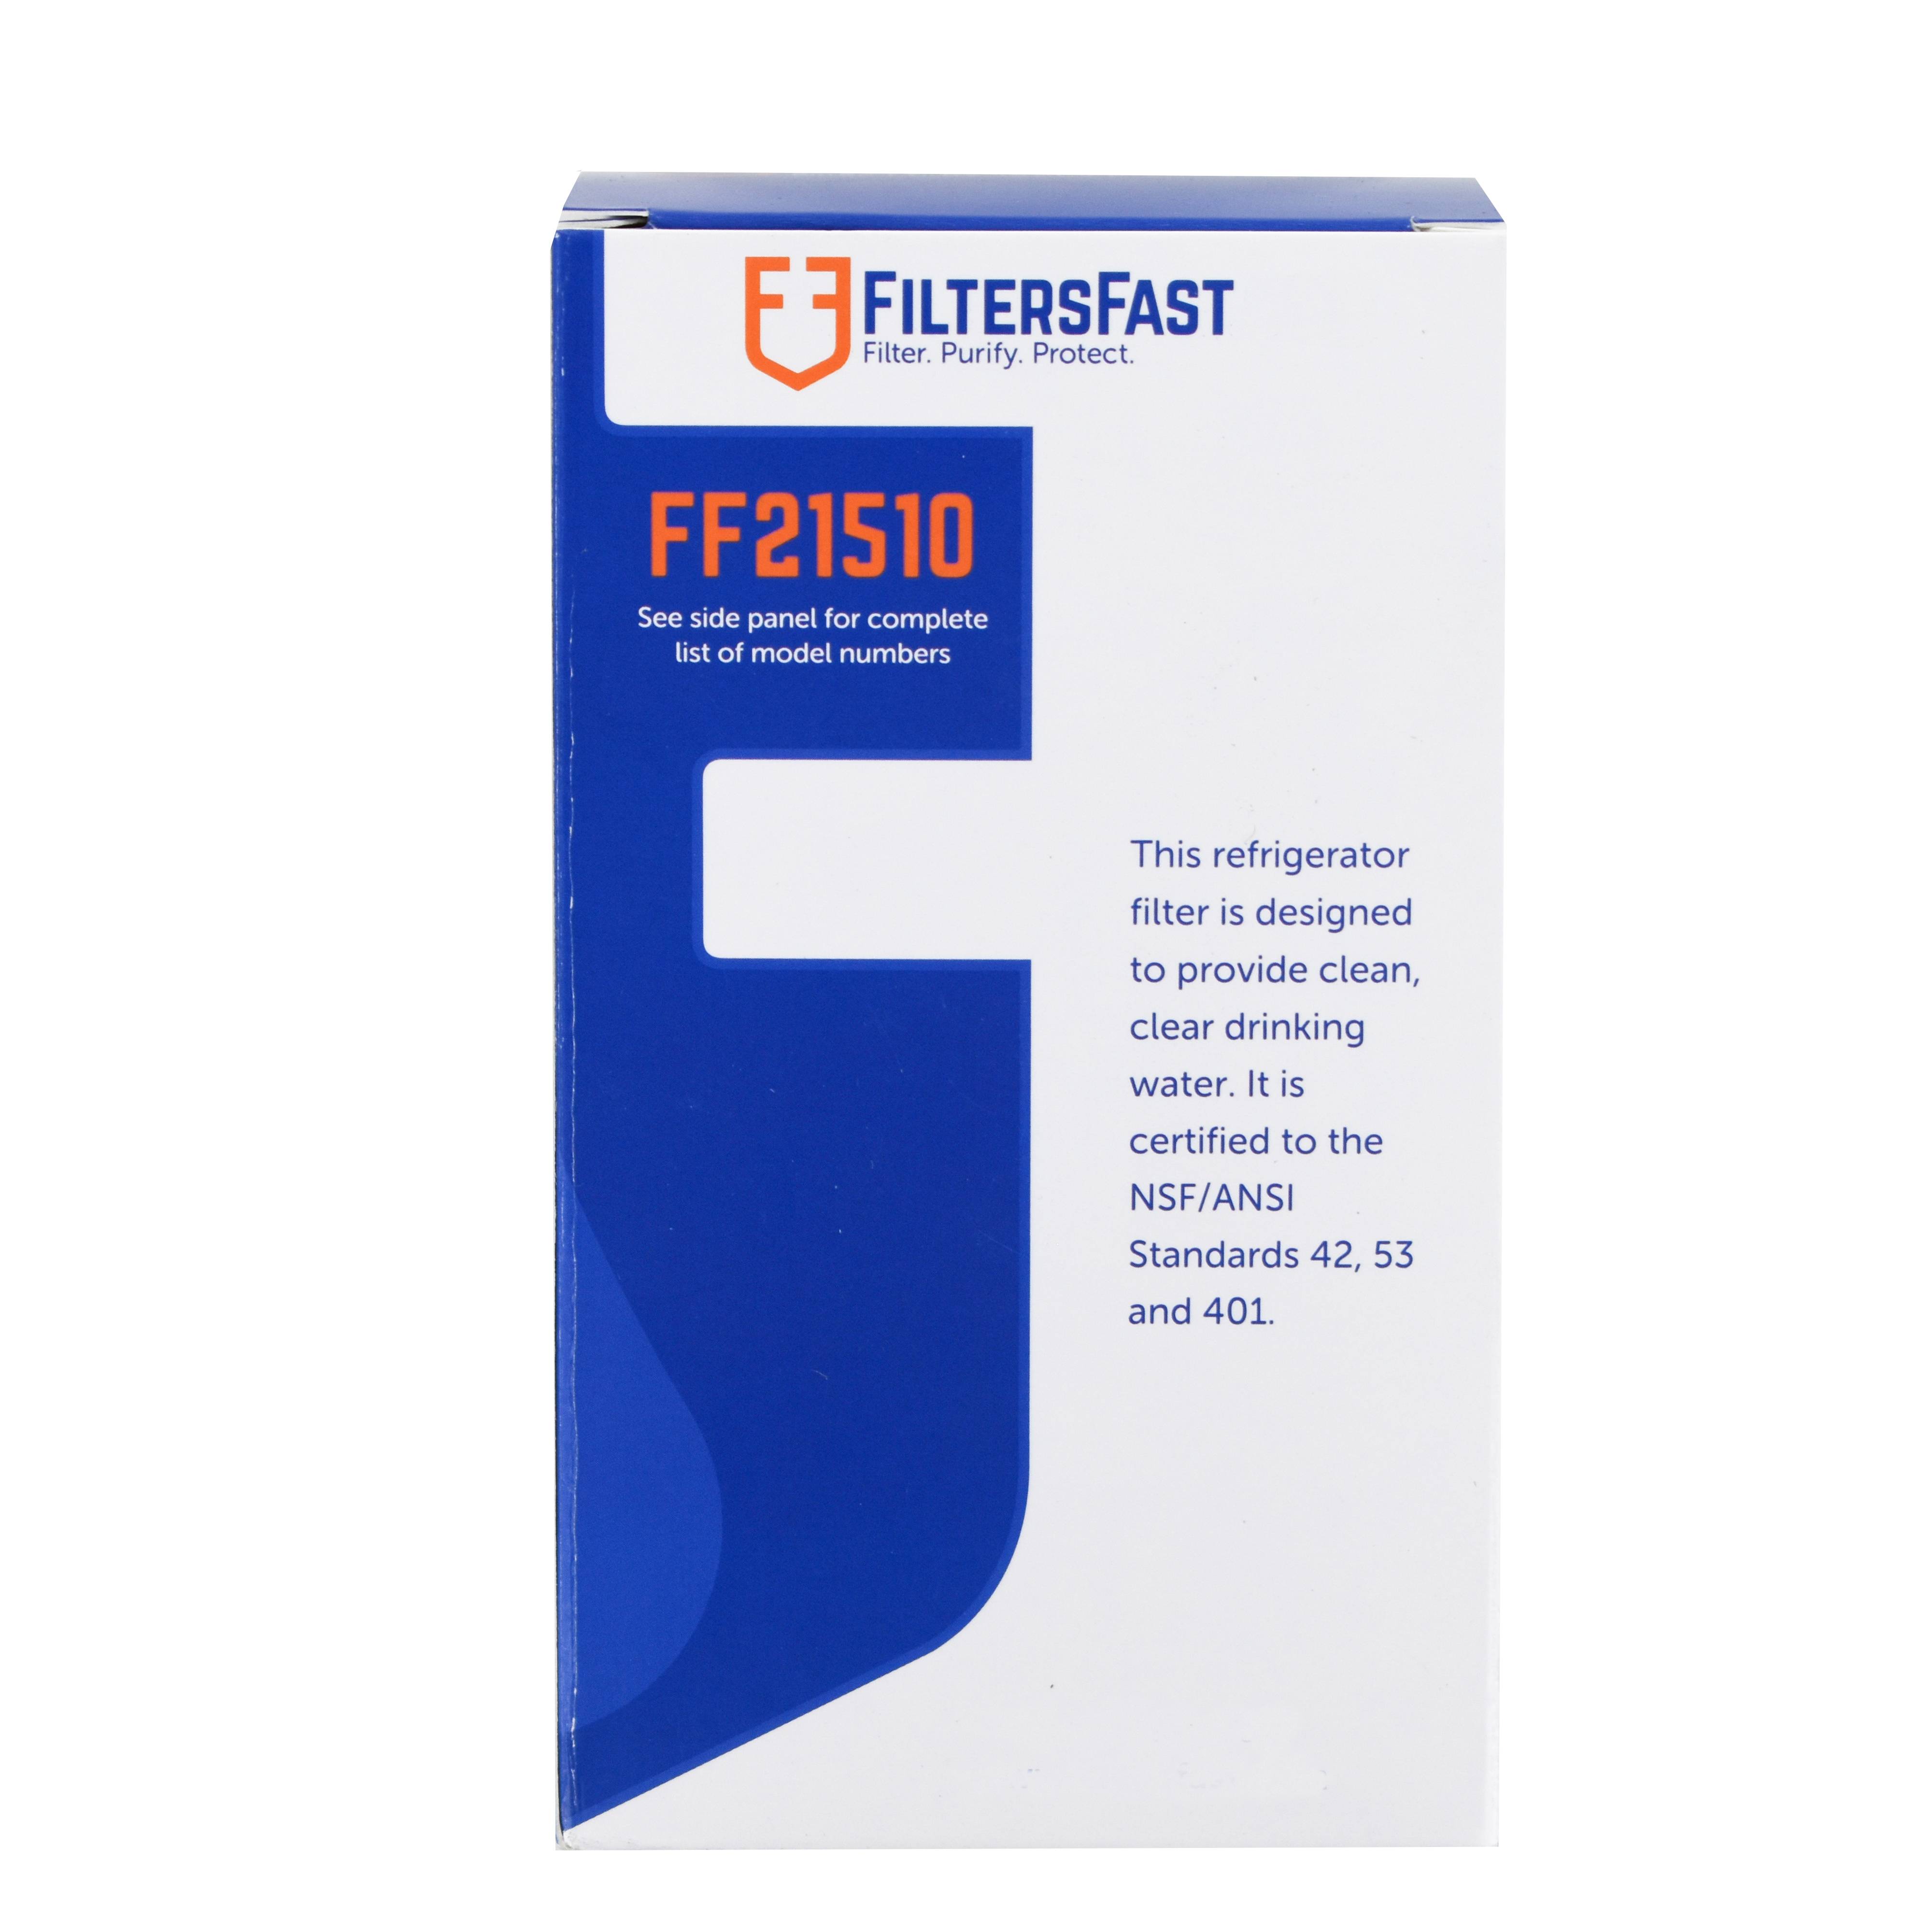 Filters Fast&reg; FF21510 Replacement for Brita MYRF-100, UKF7003AXX